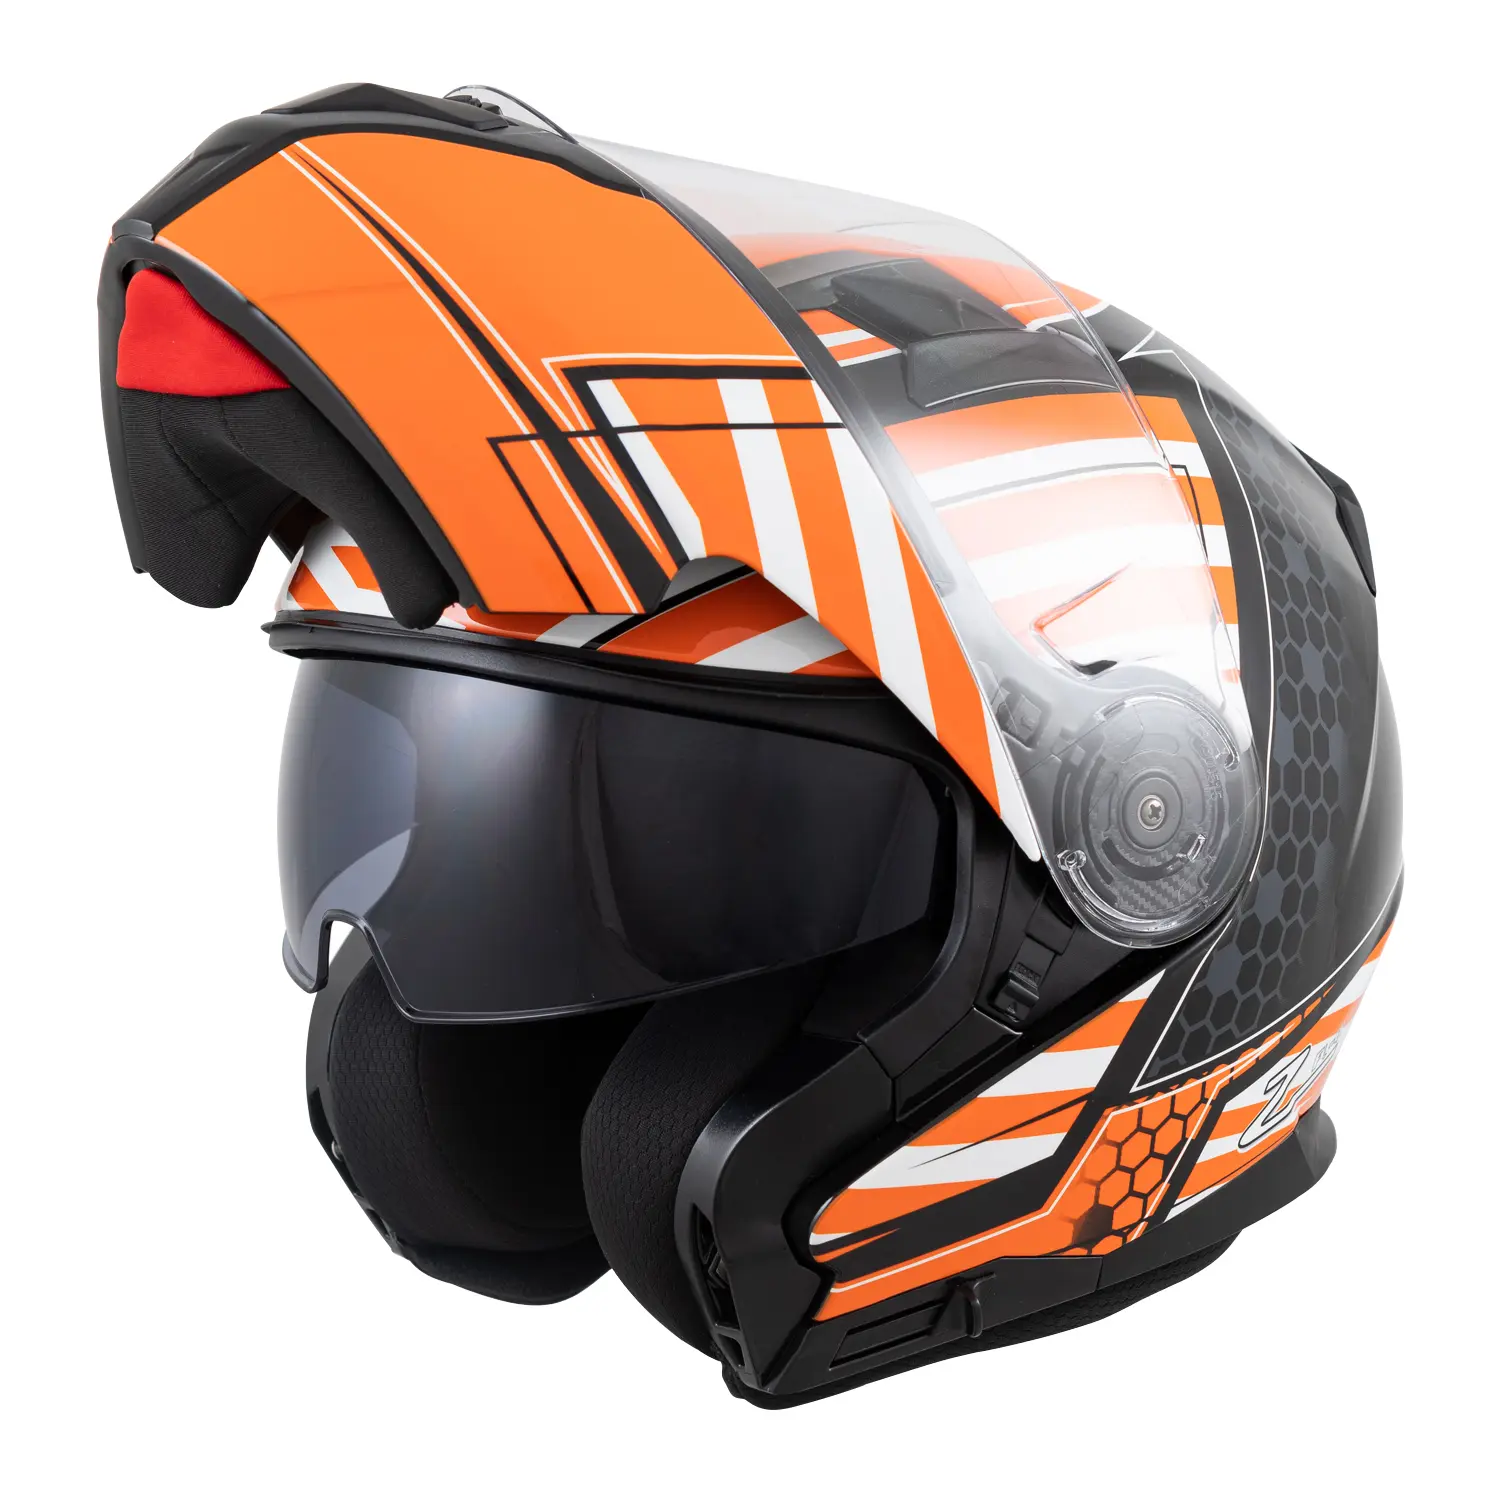 FL-4 Graphic Motorcycle Helmet